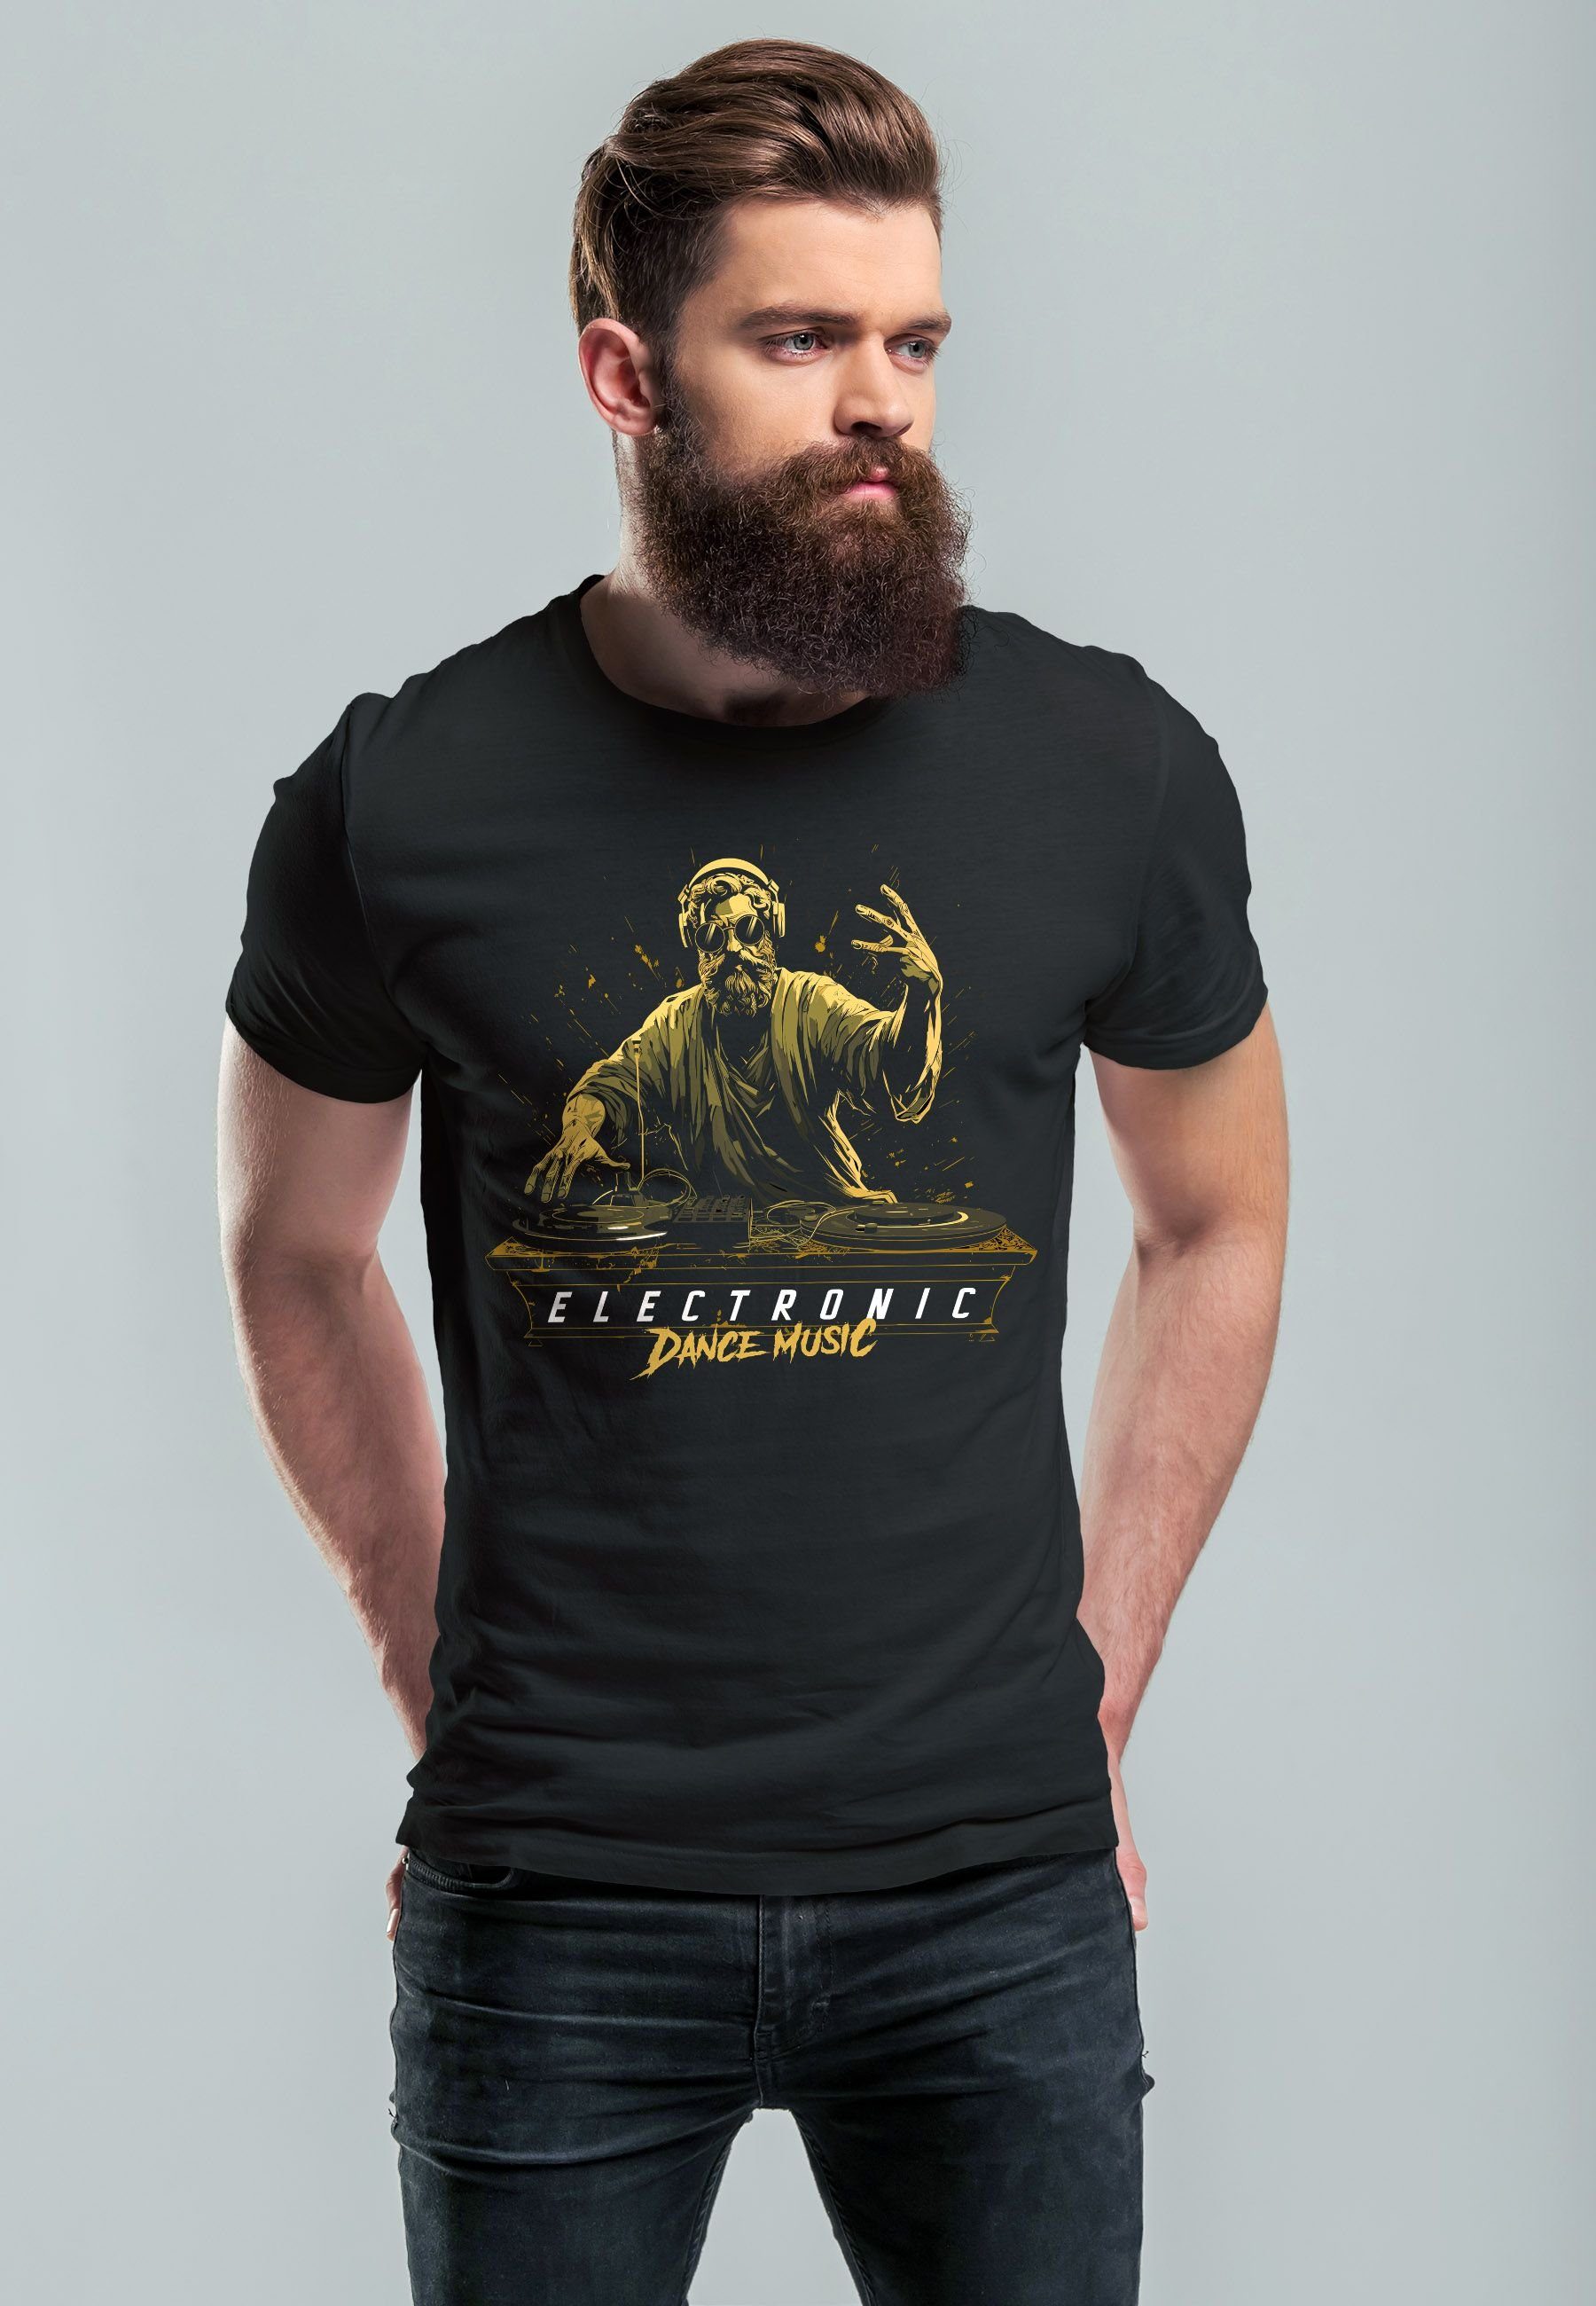 MichelangeloTechno T-Shirt Neverless Print Dance Music Fashion Herren schwarz Print-Shirt Str mit DJ Eletronic